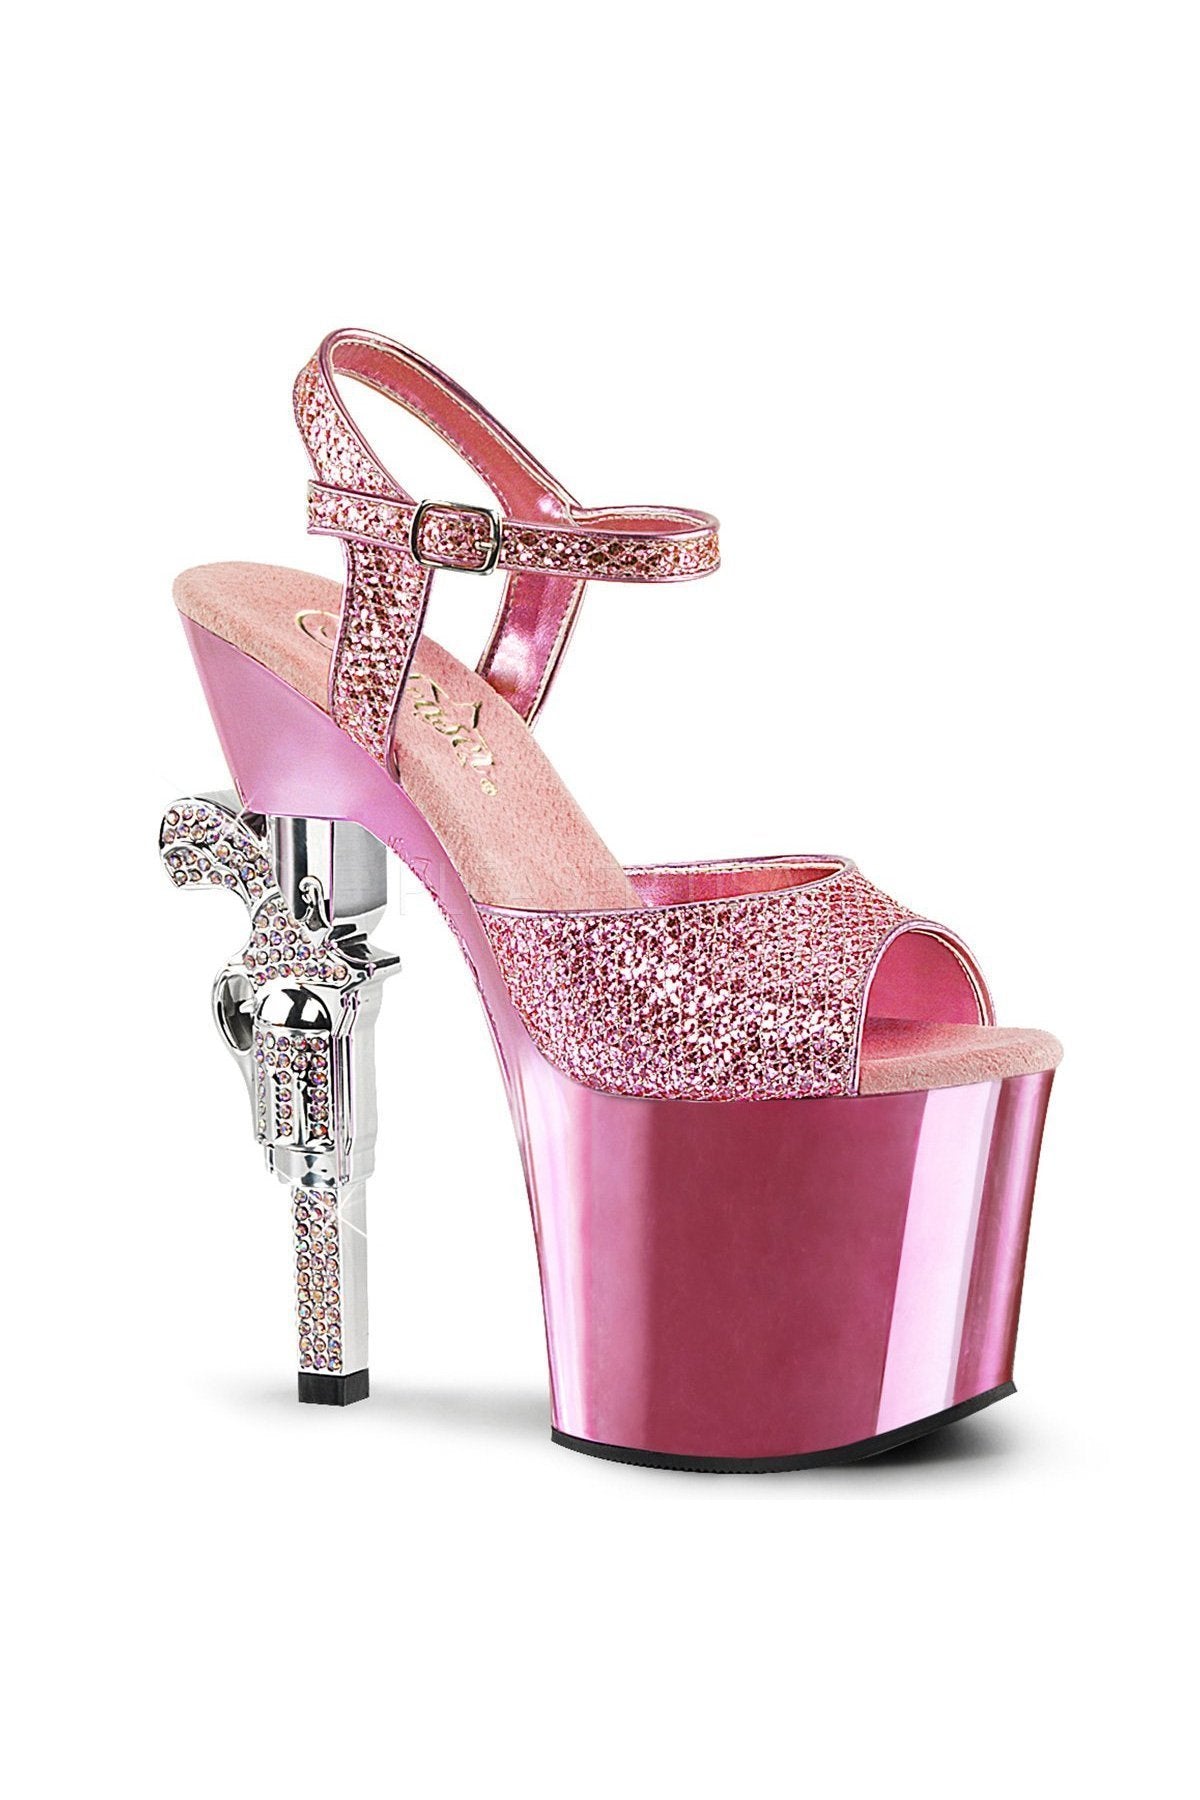 REVOLVER-709G Baby Pink Chrome Heels-Pleaser-Tragic Beautiful